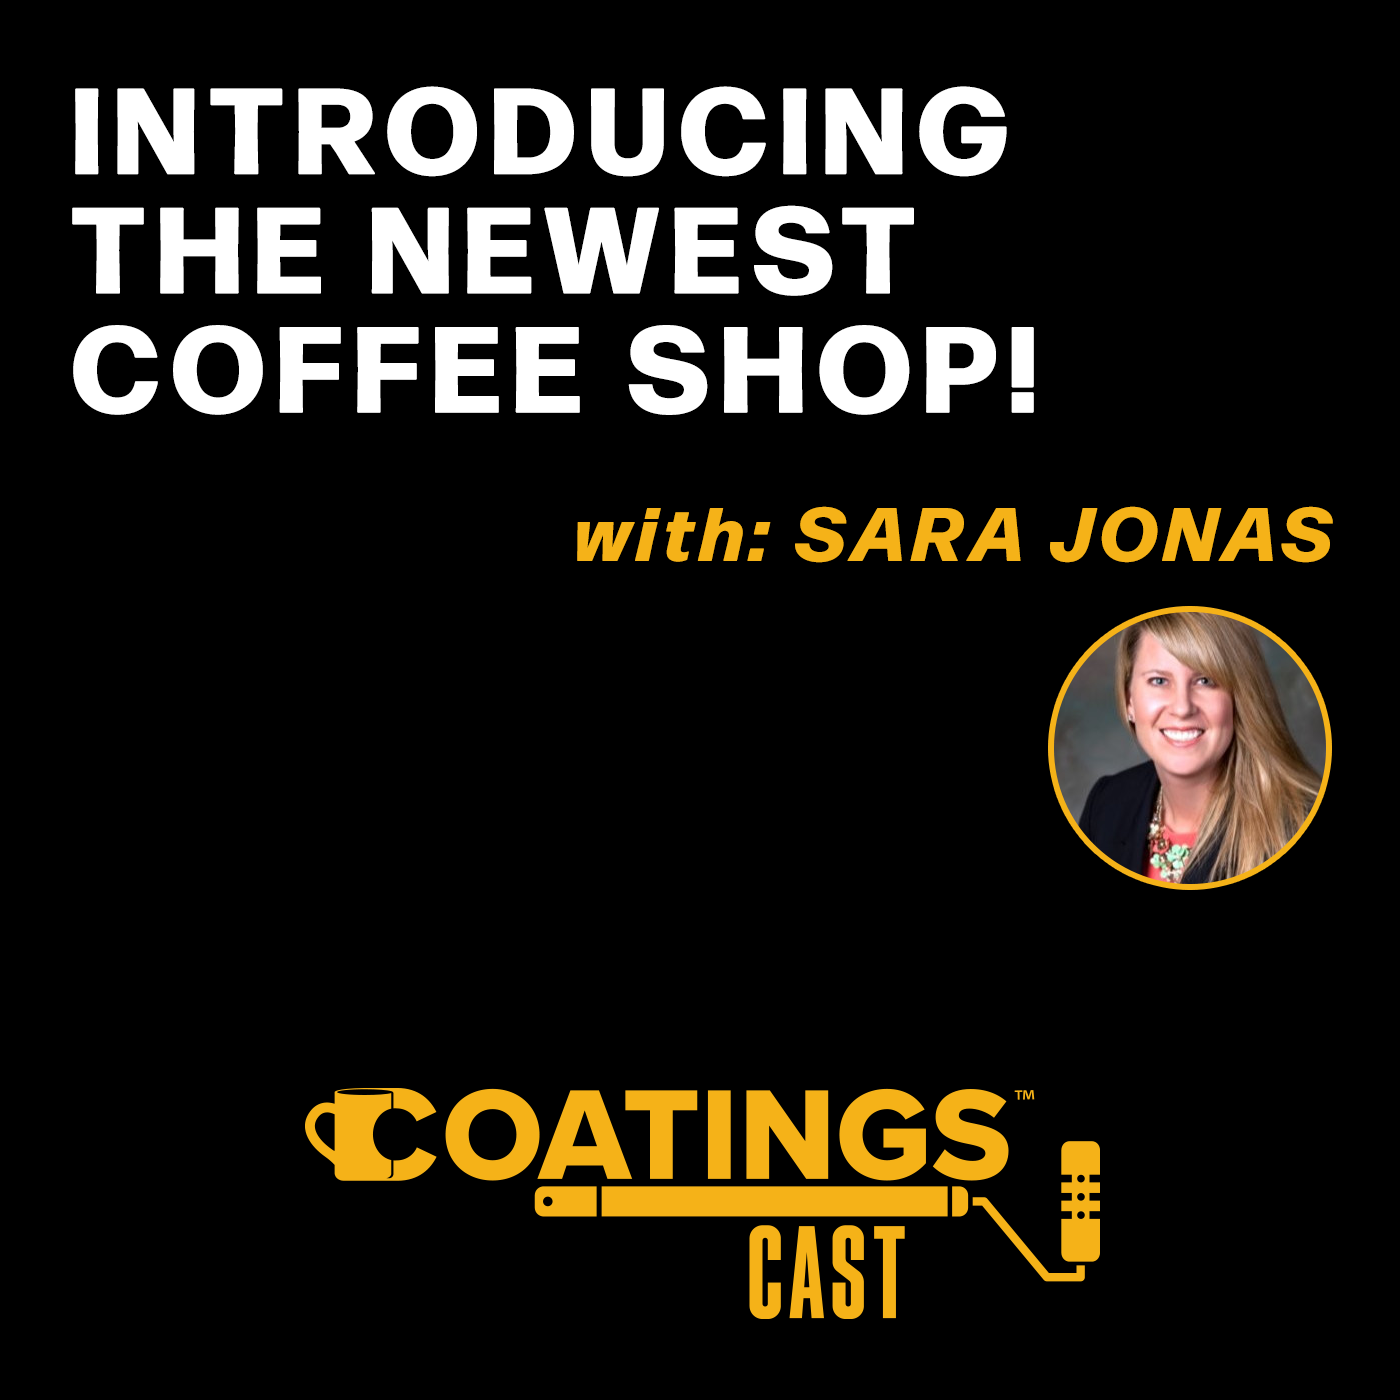 APOC - Sara Jonas - The New CoatingsCoffeeShop™ Site! - POD